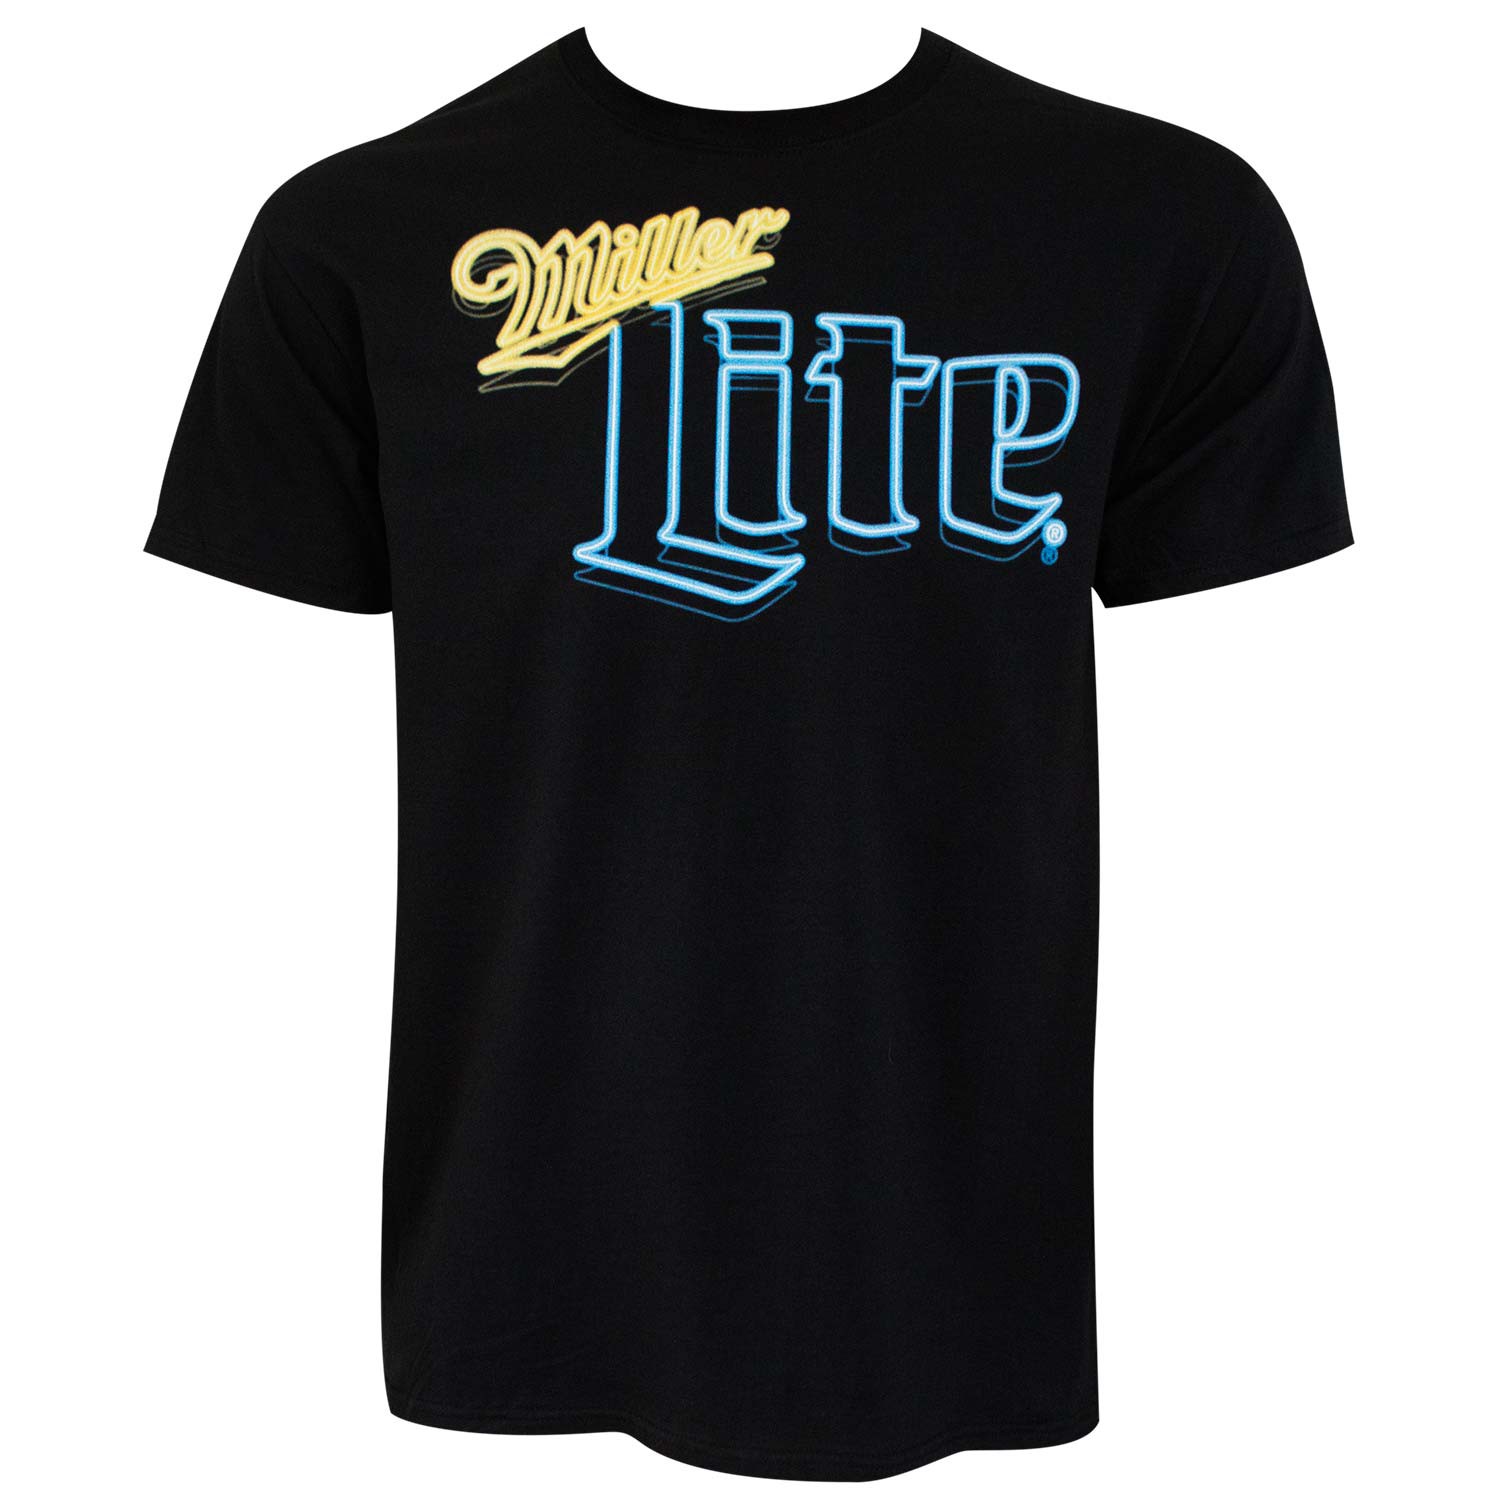 Miller Lite Neon Sign Men's Black T-Shirt.